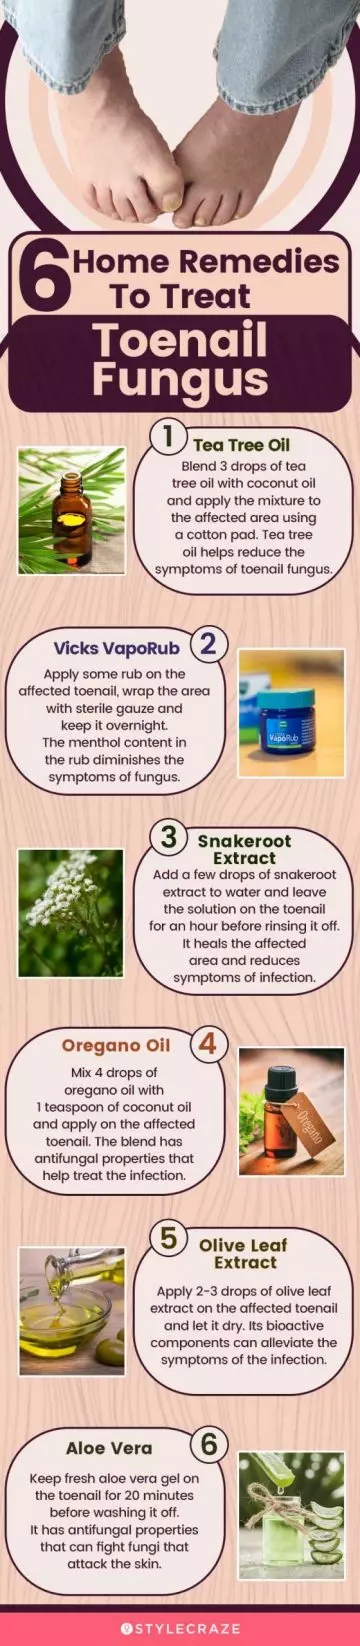 6 home remedies to treat toenail fungus (infographic)